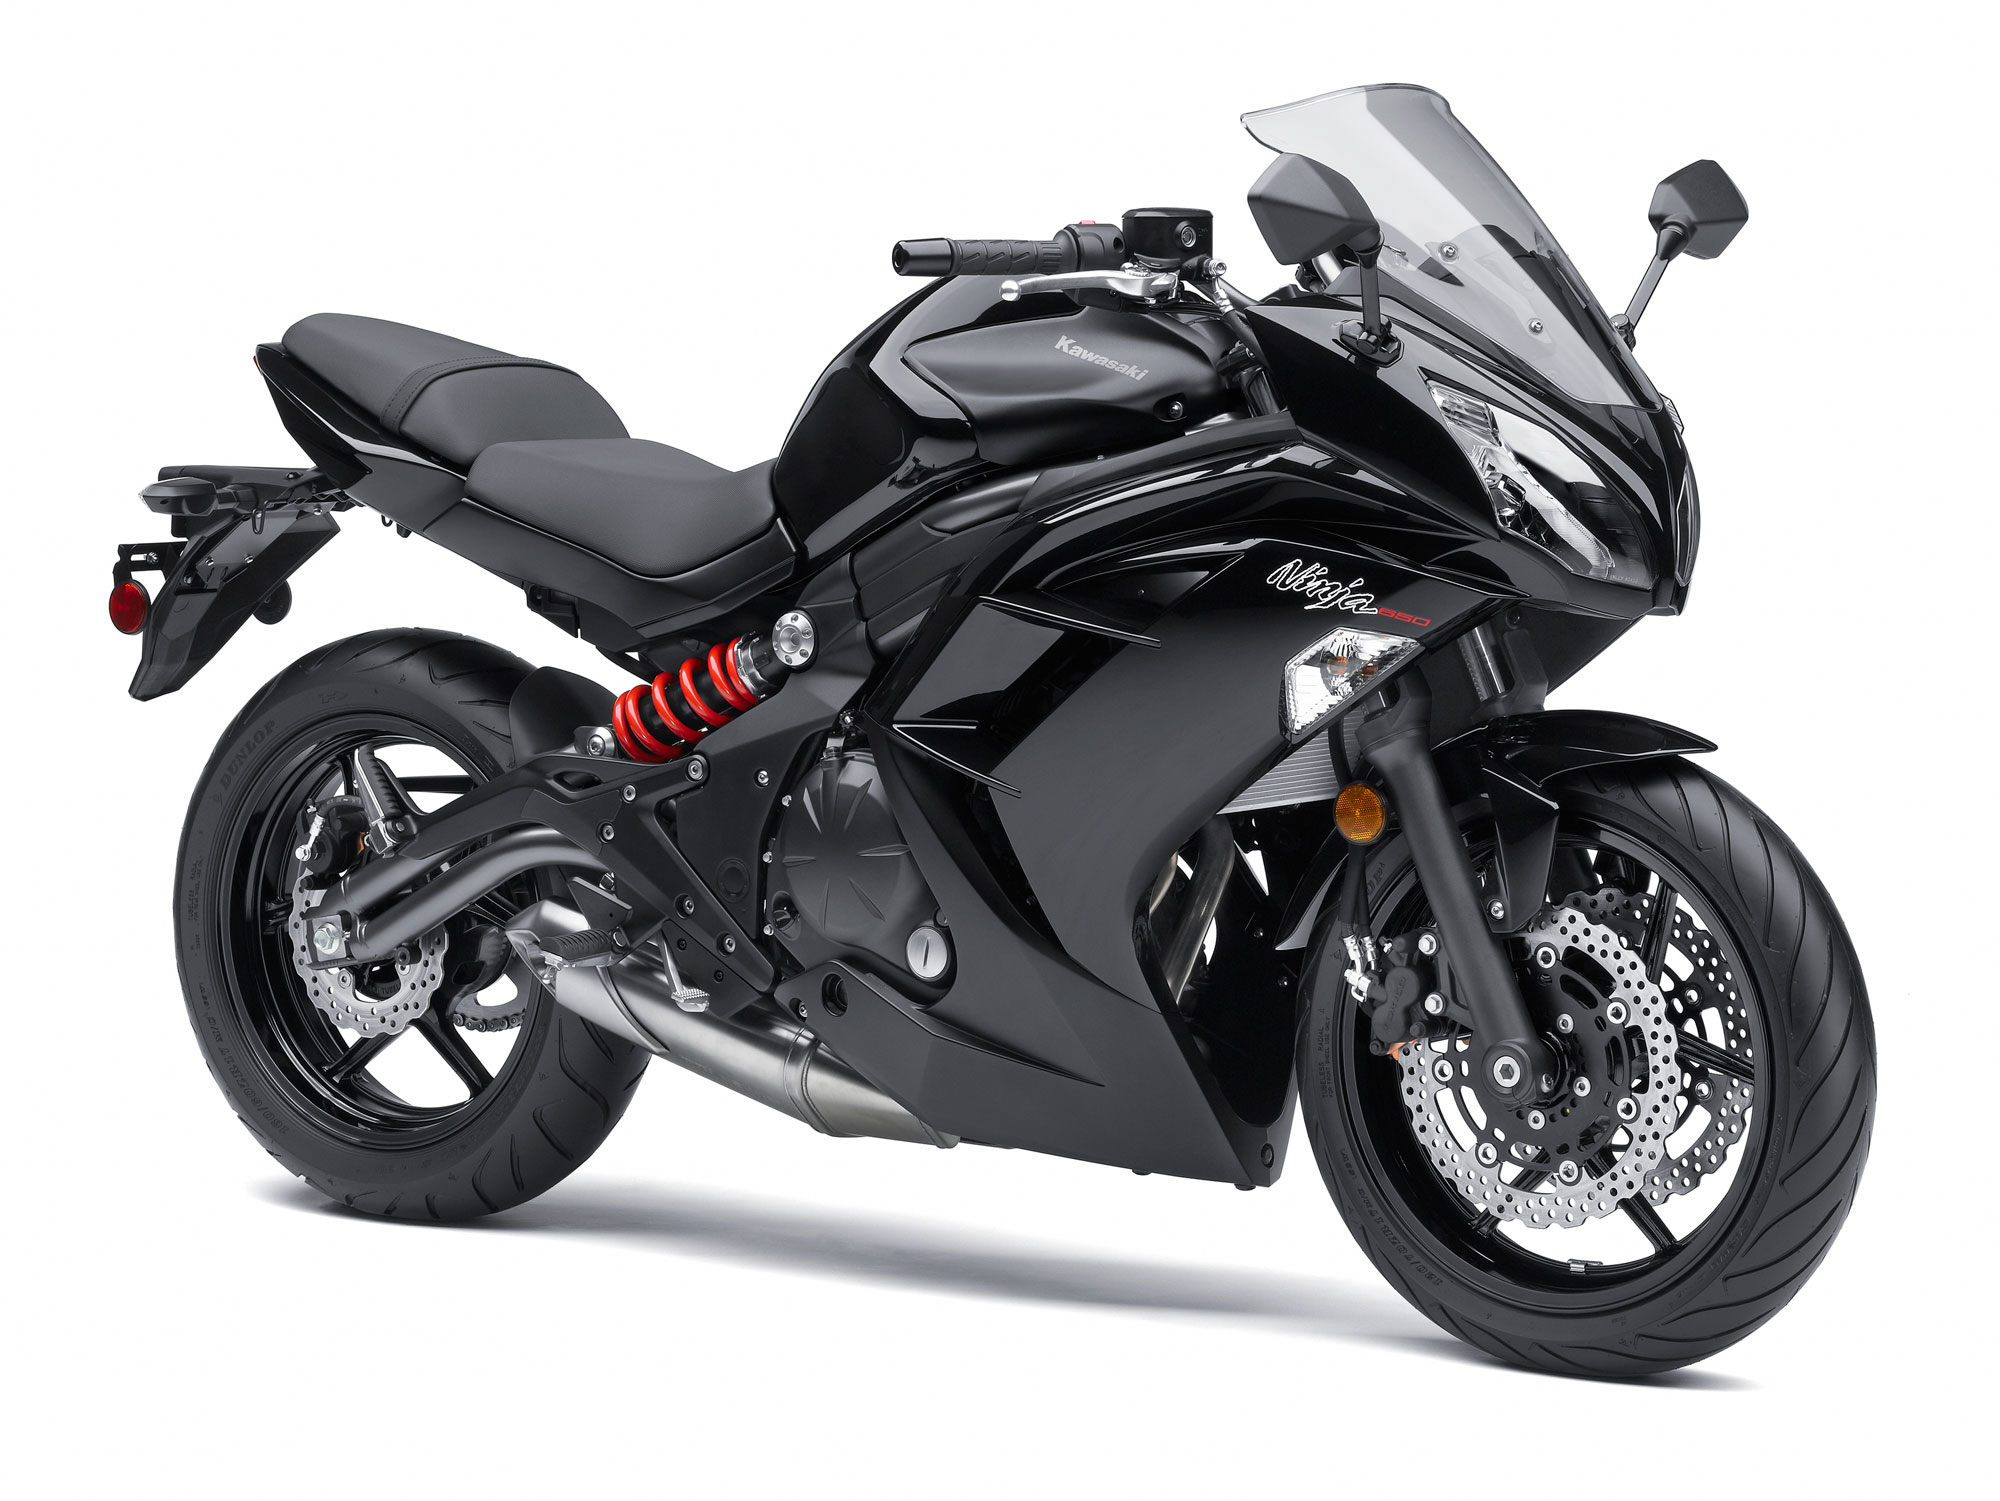 Kawasaki Ninja 650 2013 completamente renovada | Motos Blog